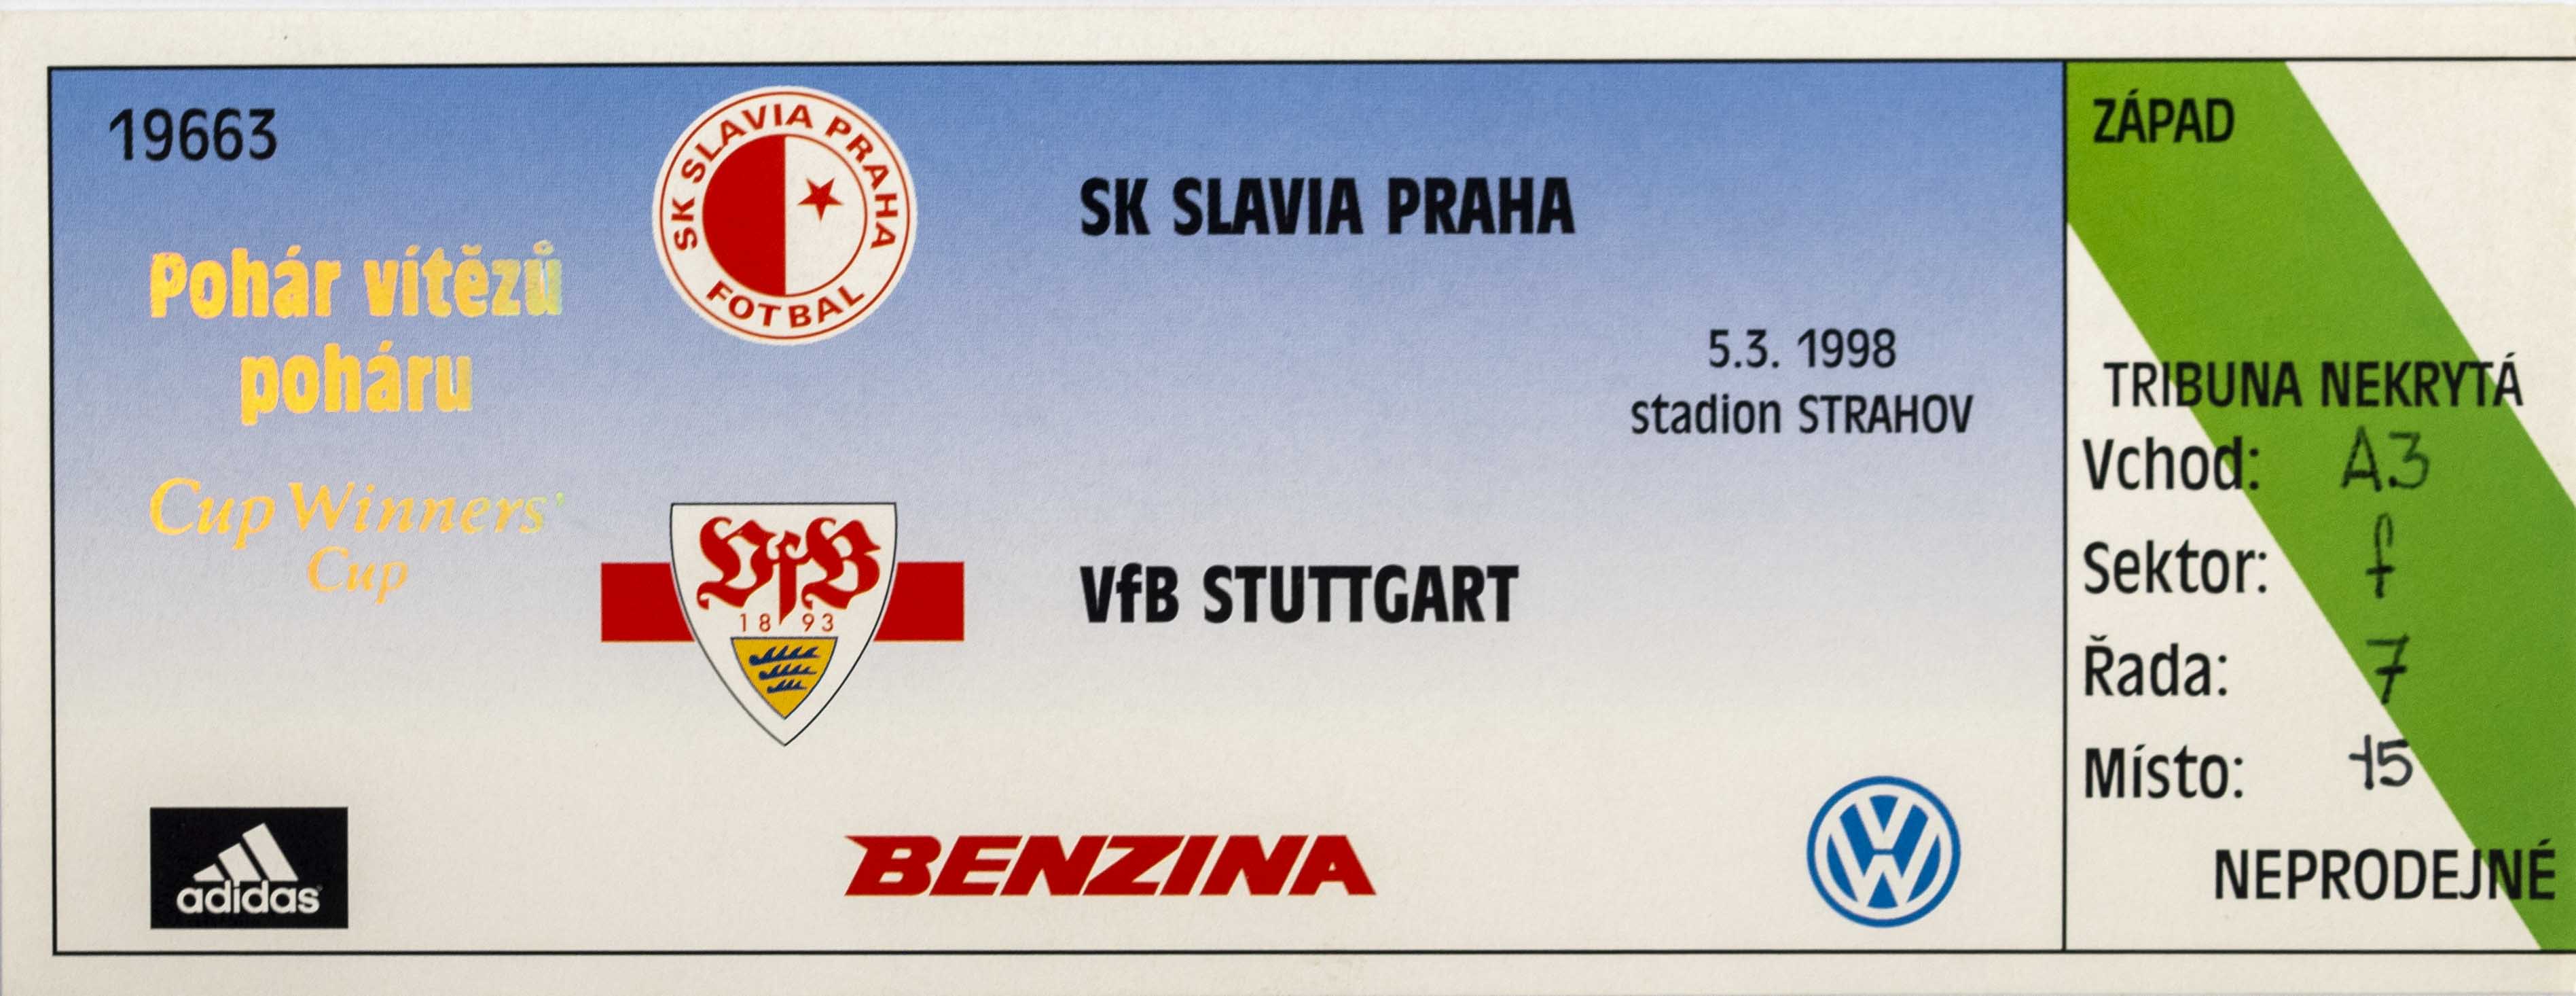 Vstupenka SK Slavia Praha vs. VfB STUTTGART, PVP 1998